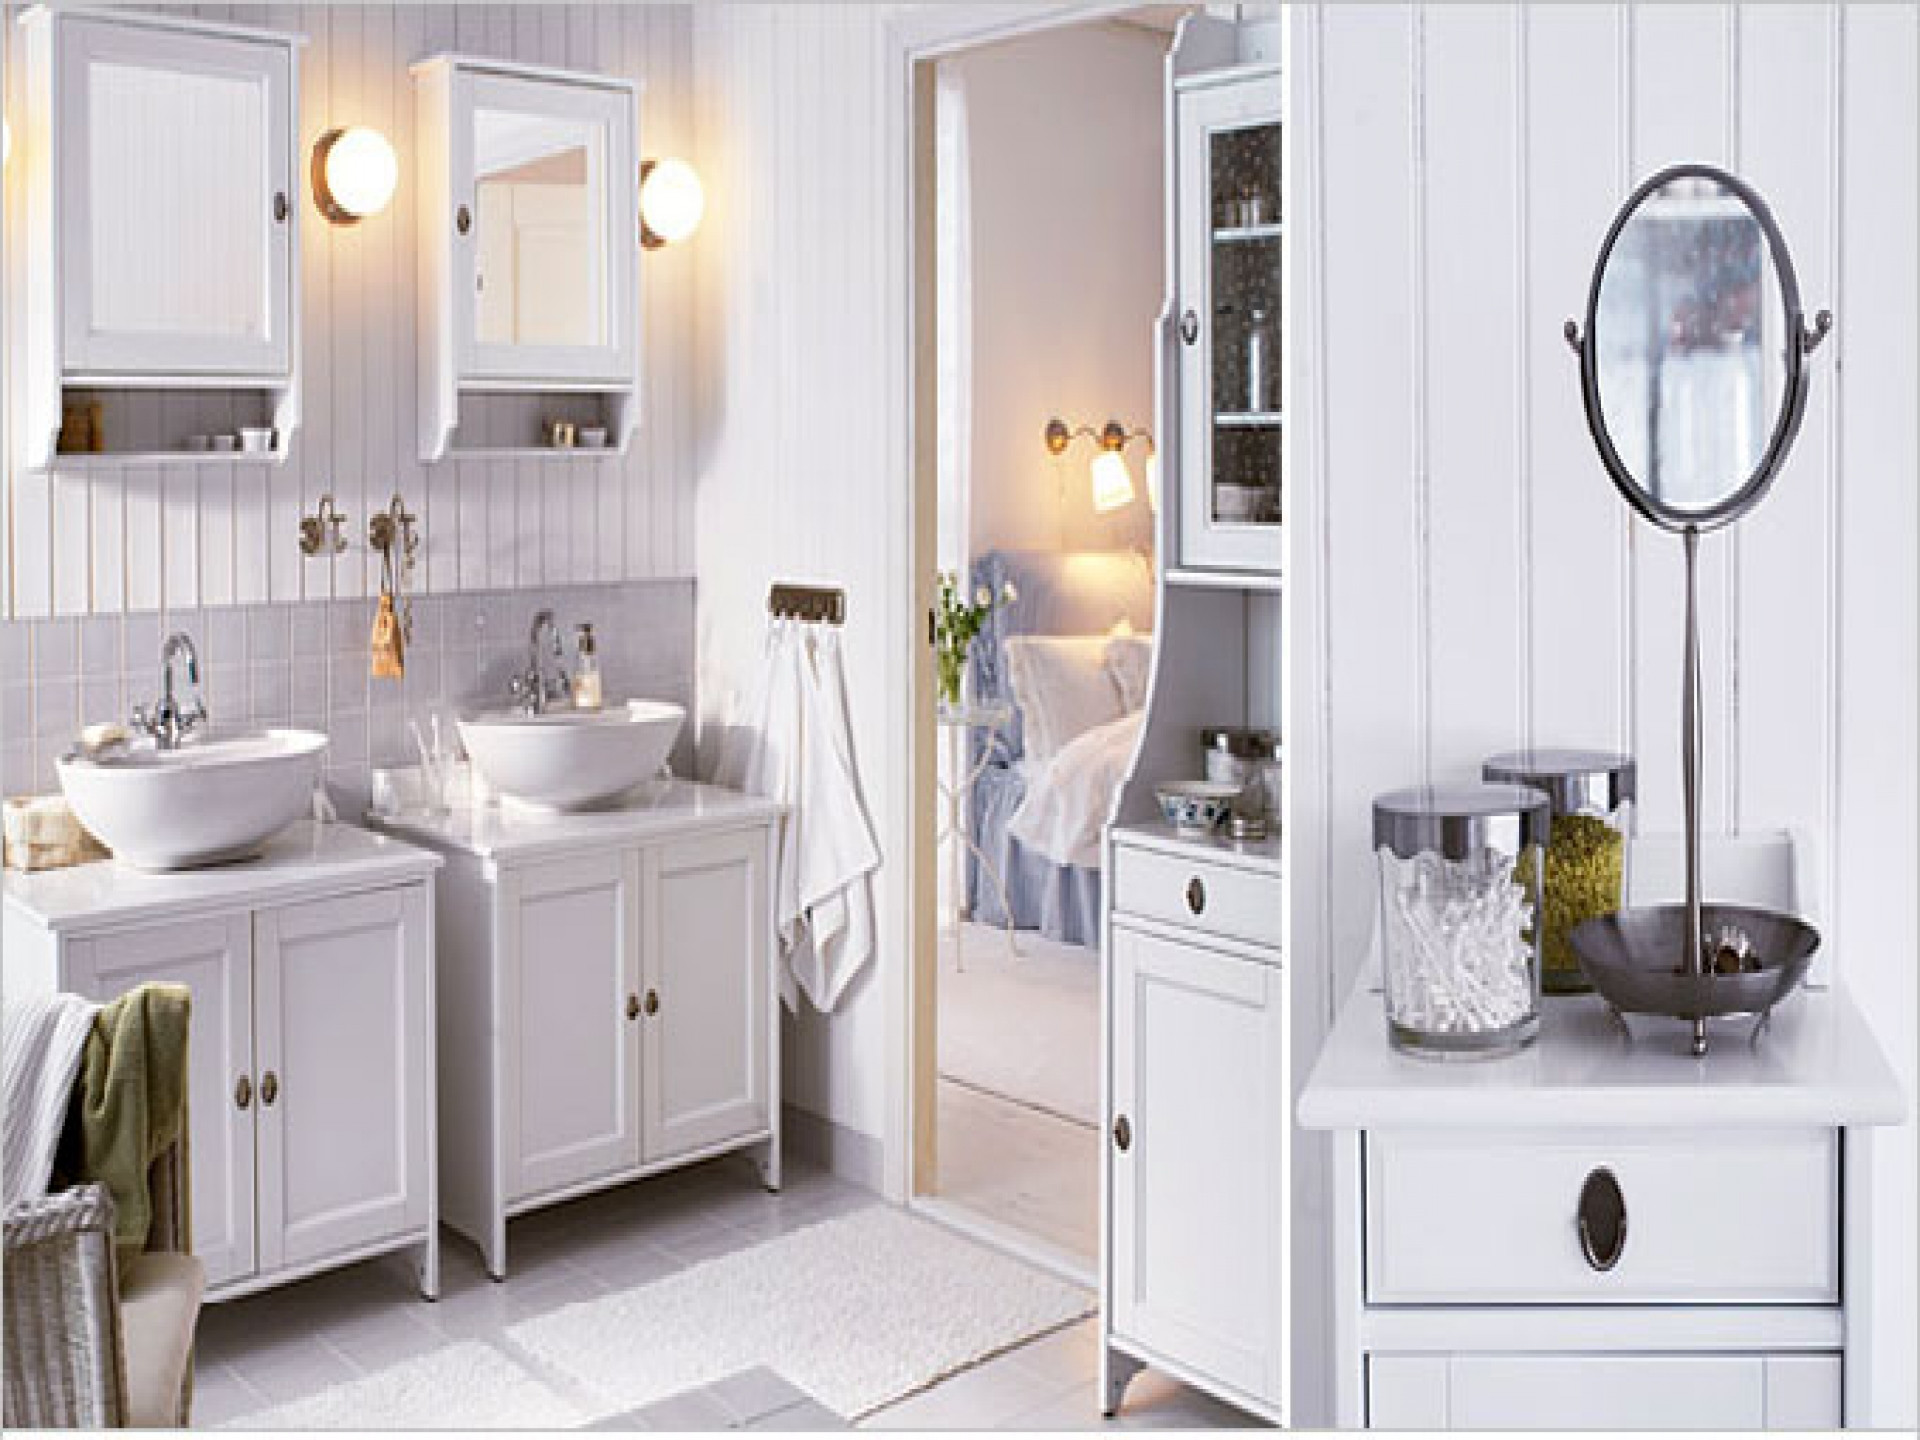 Ikea Cabinets Bathroom
 Ikea Bath Cabinet Invades Every Bathroom with Dignity